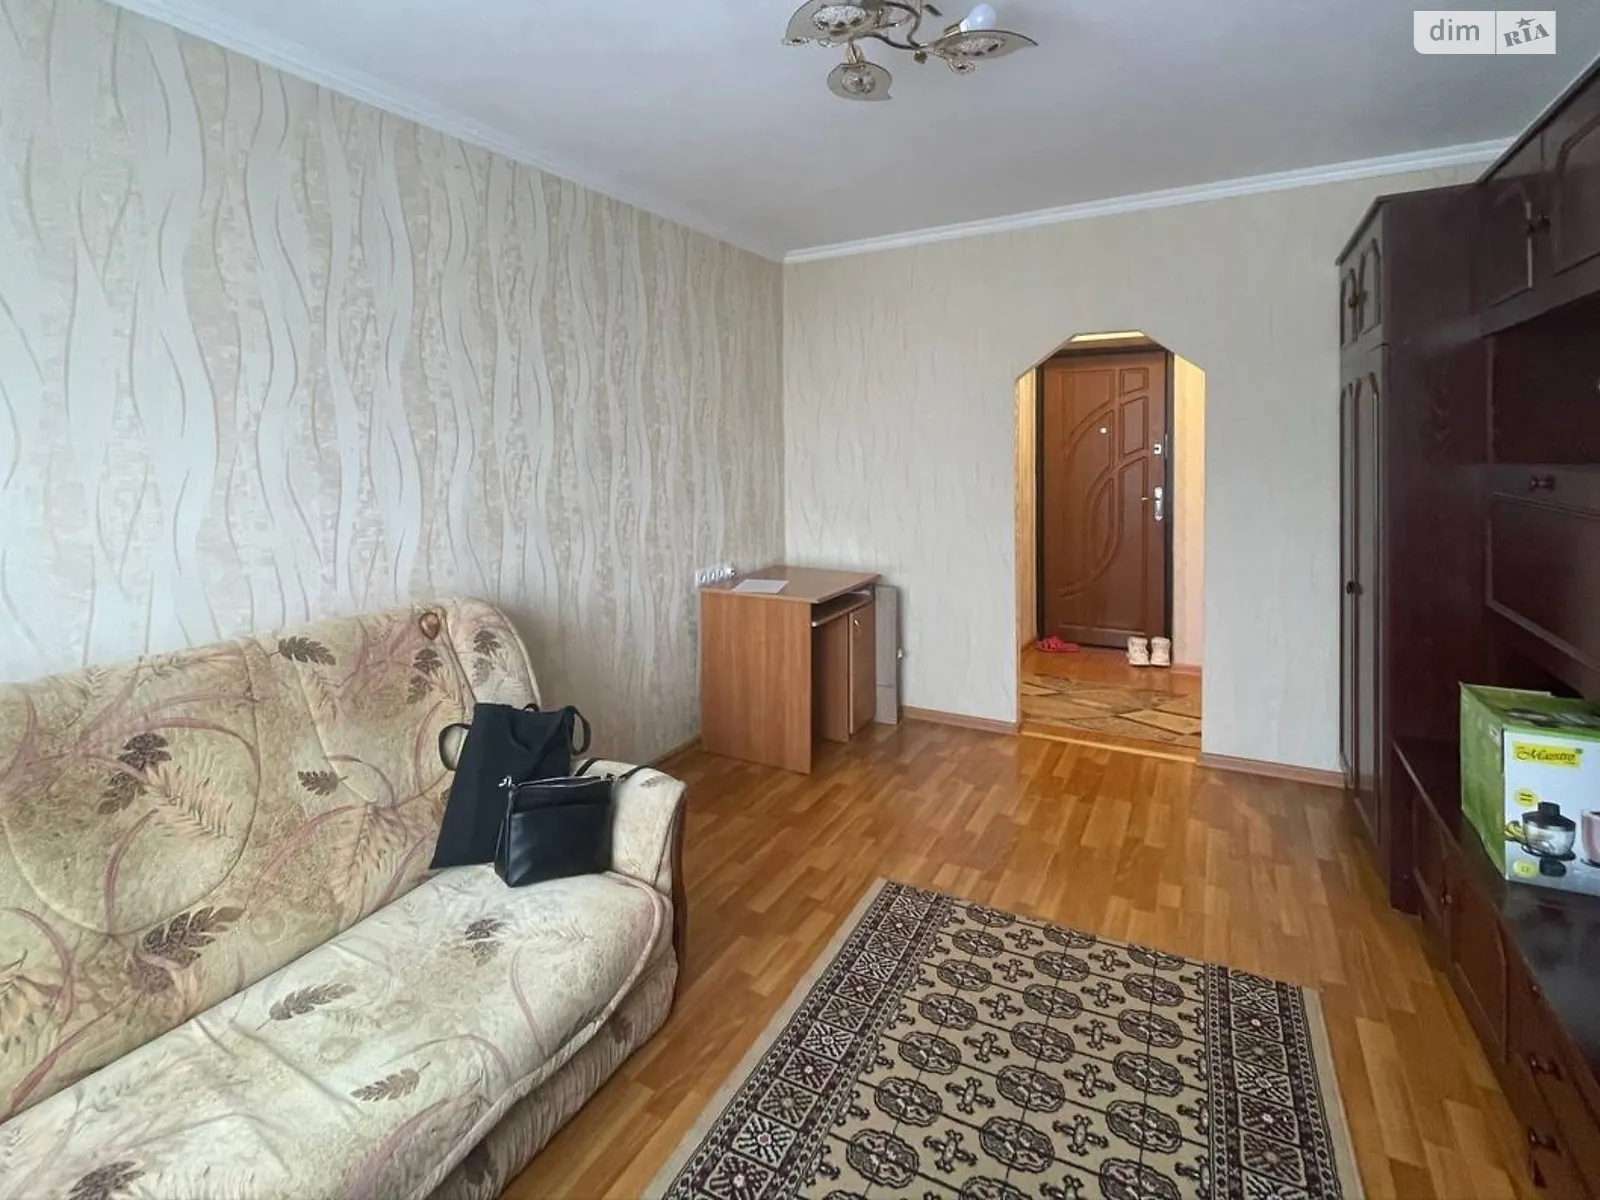 Продается комната 17 кв. м в Тернополе, цена: 9500 $